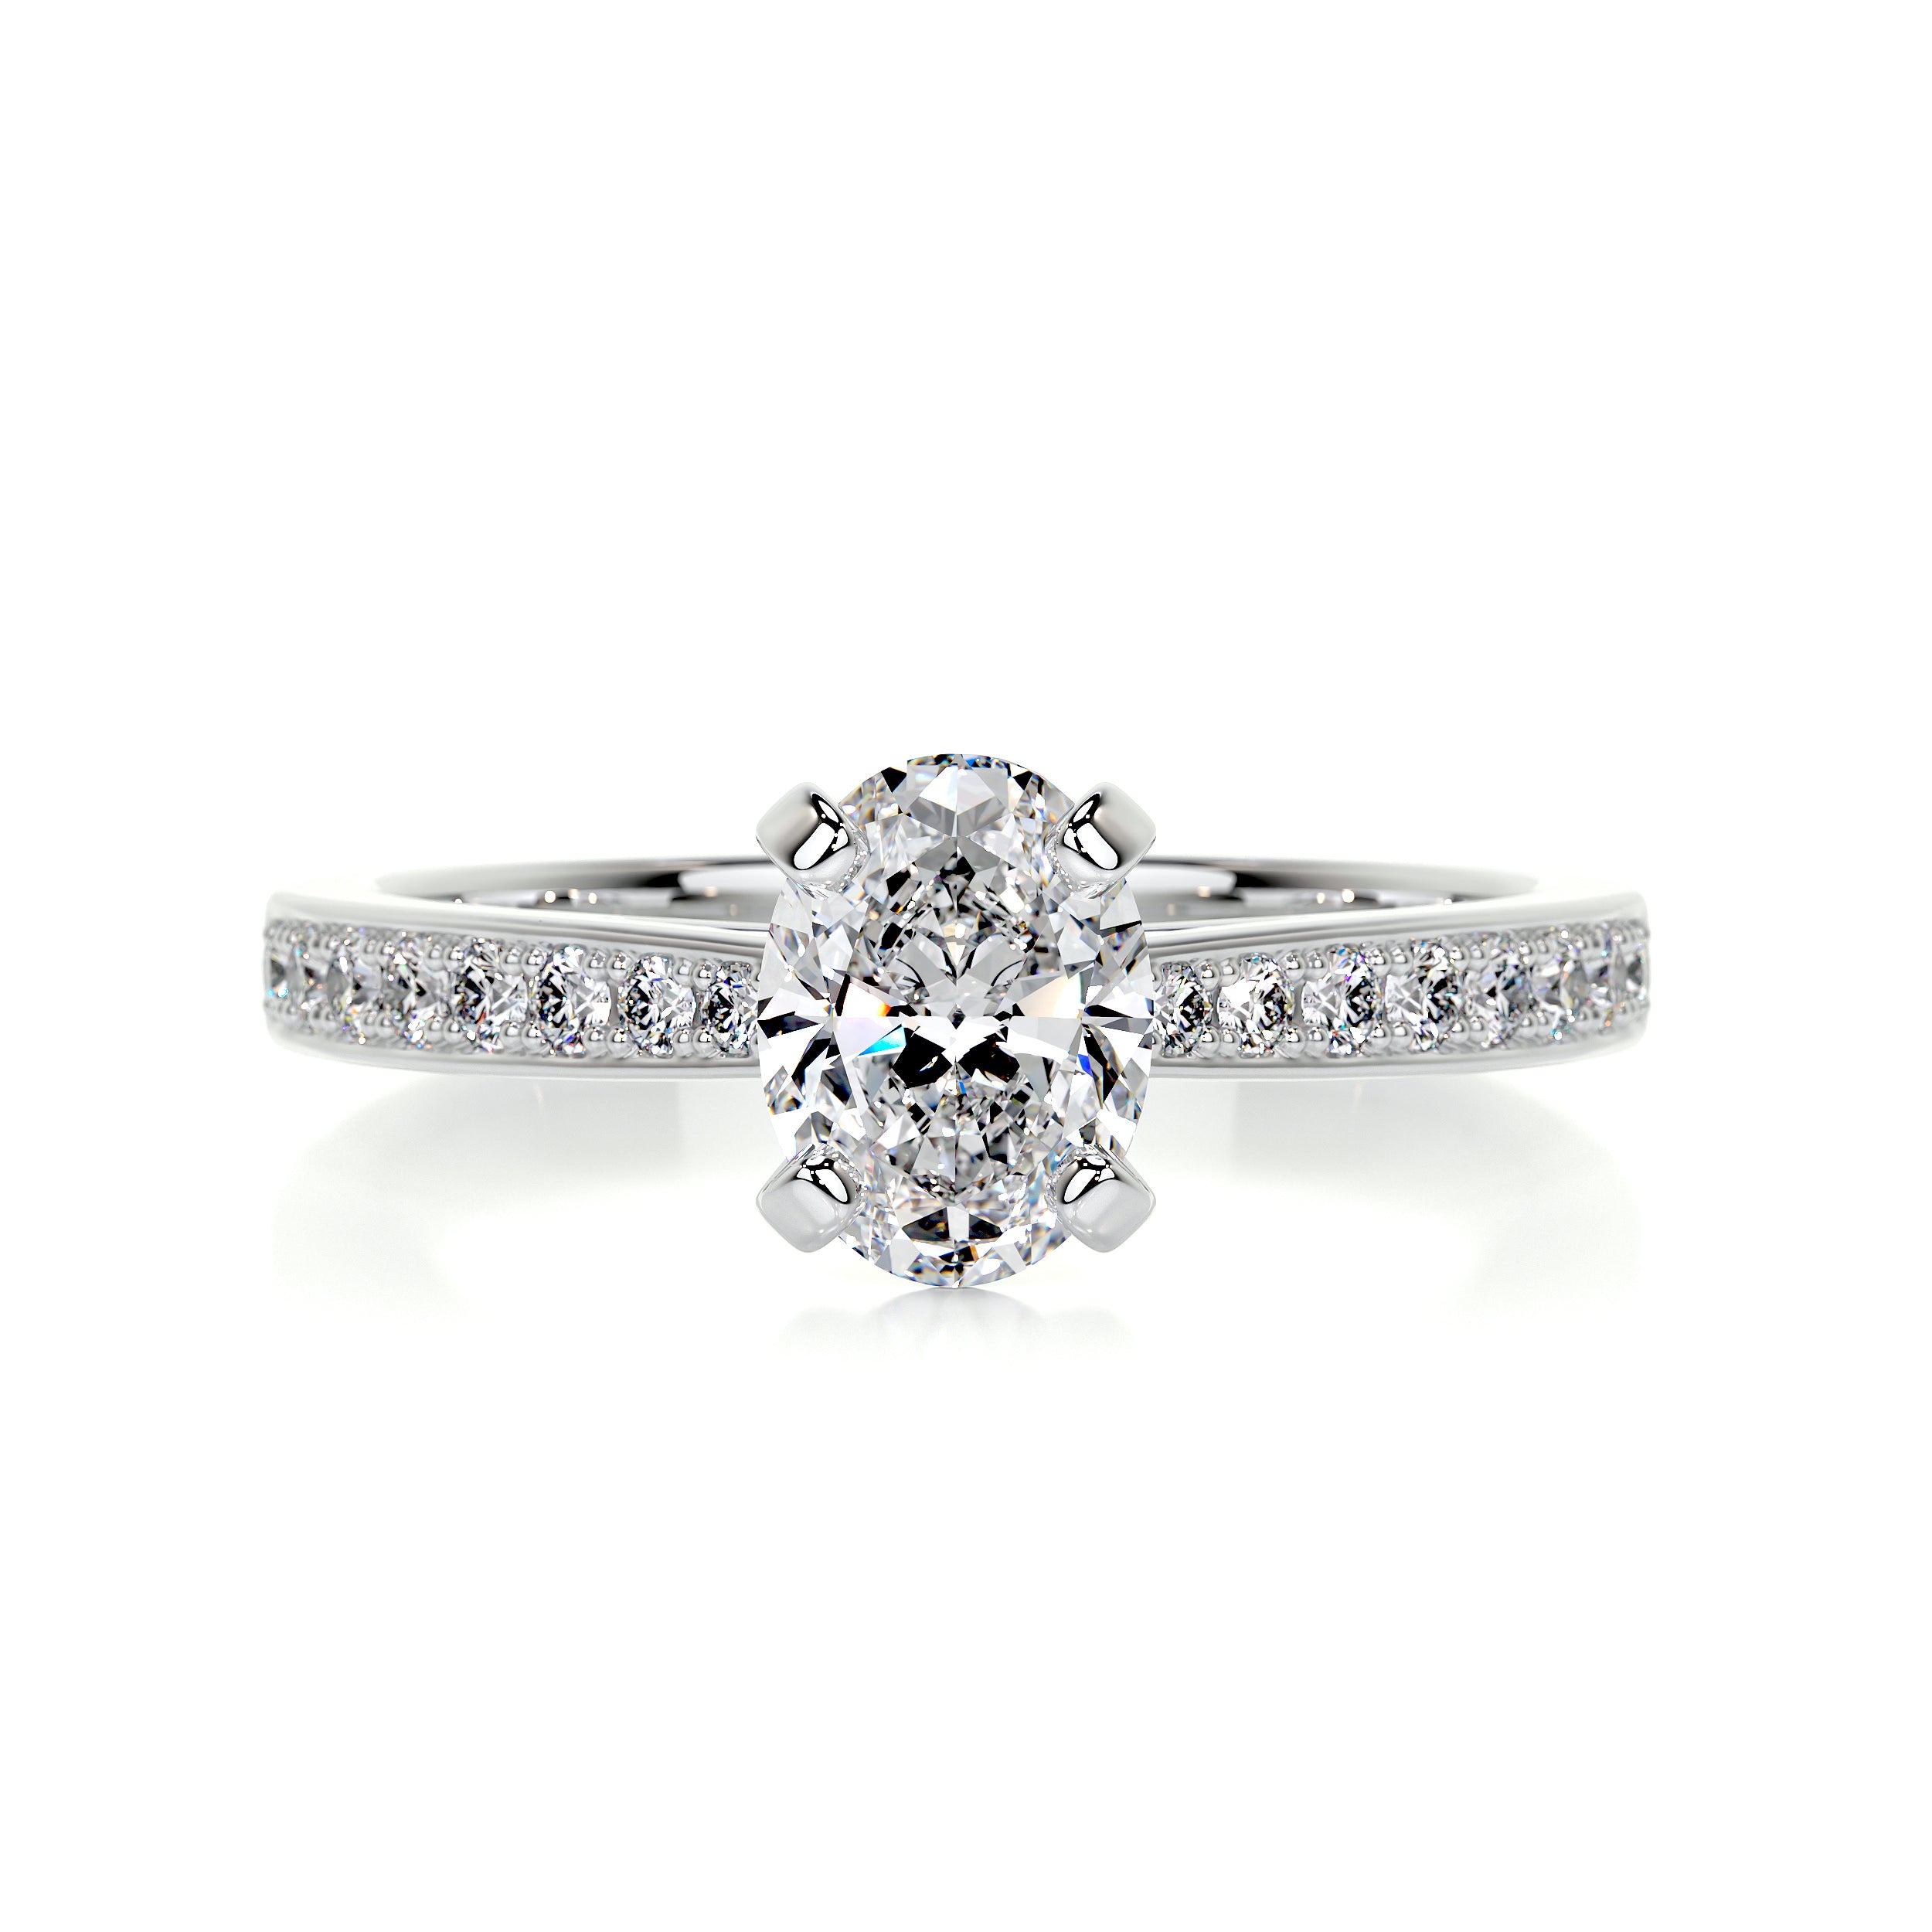 Talia Diamond Engagement Ring   (1 Carat) -14K White Gold